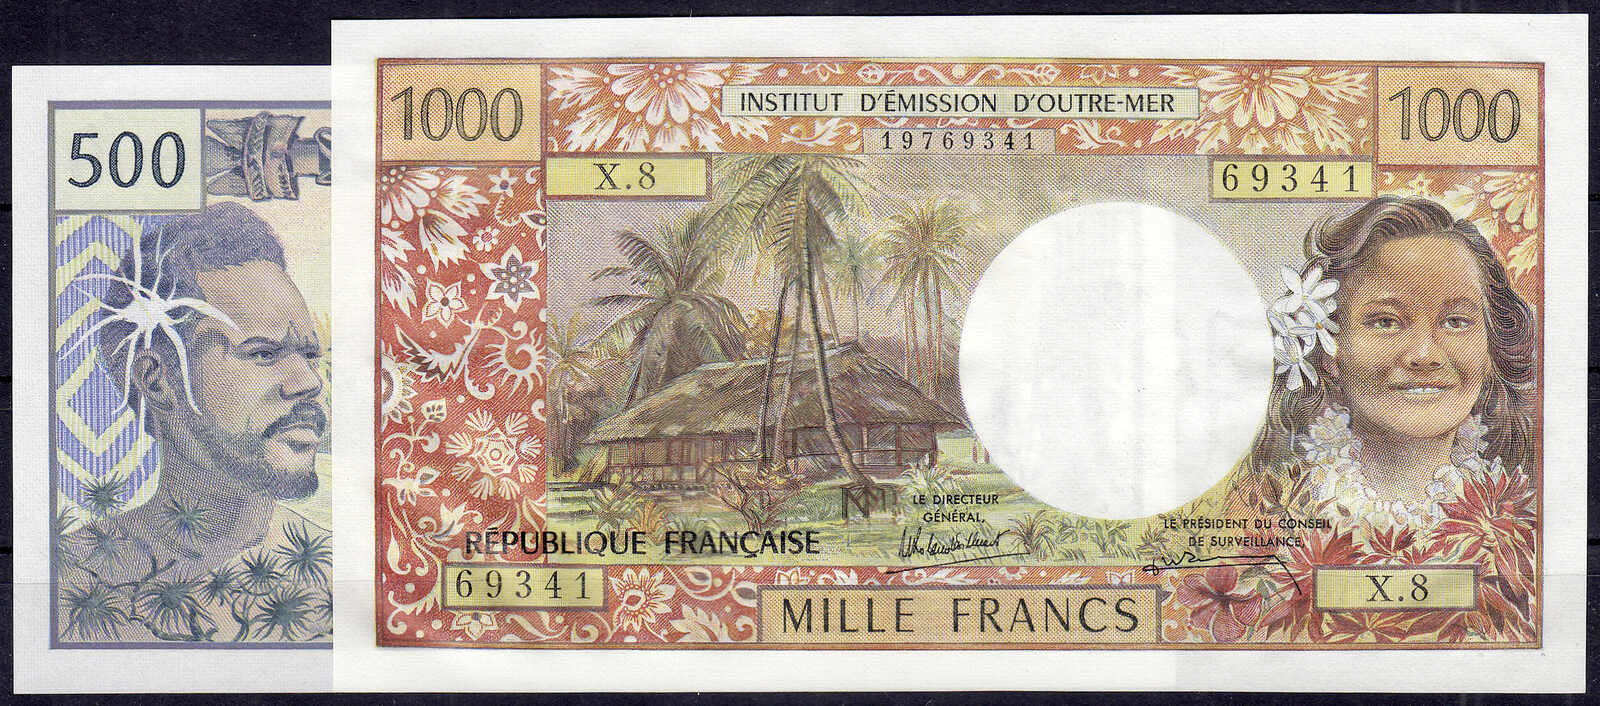 110.580.130: Billets - Océanie - Tahiti